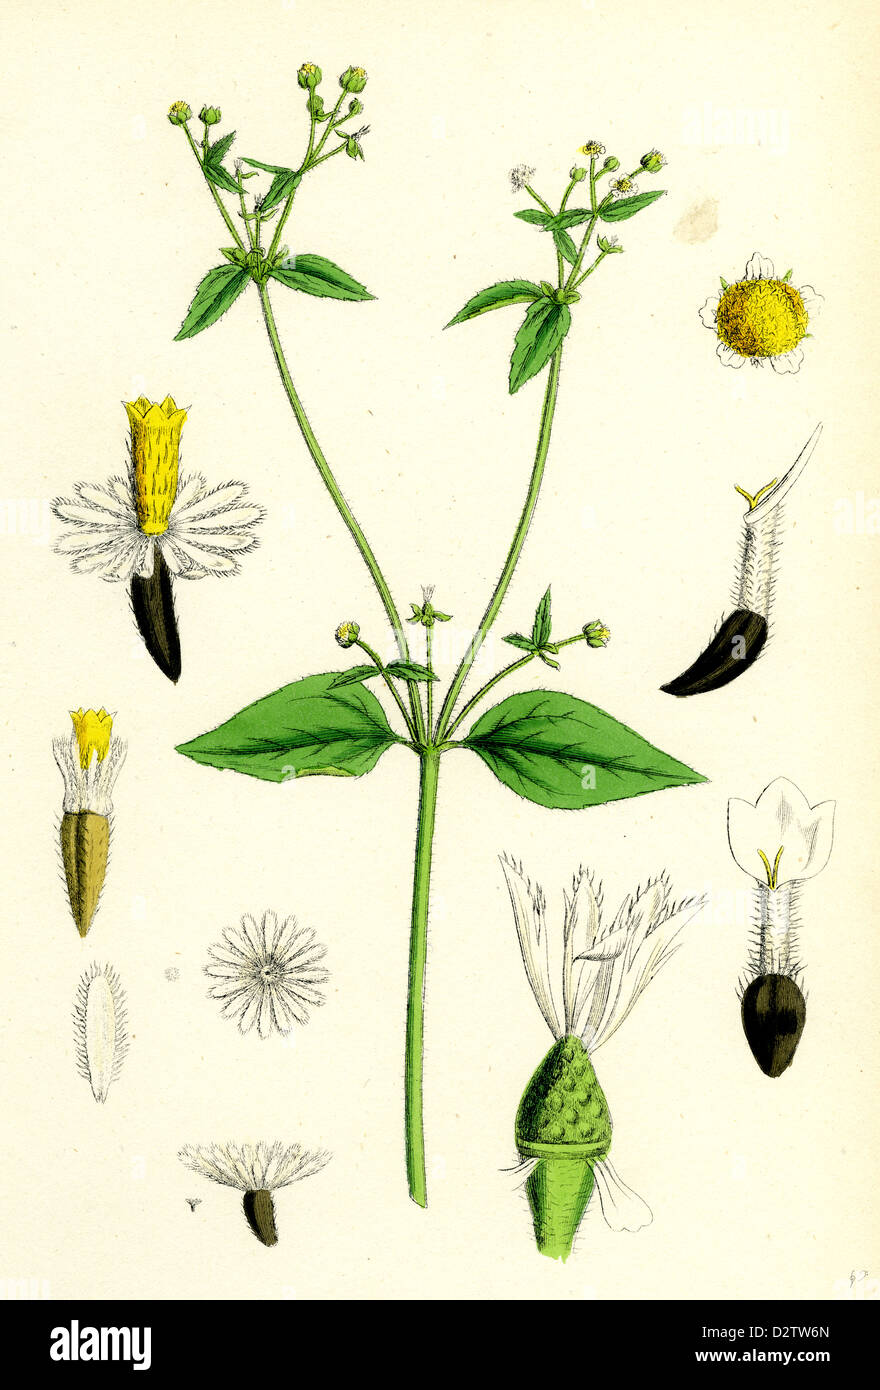 Galinsoga parviflora; Small-flowered Galinsoga Stock Photo